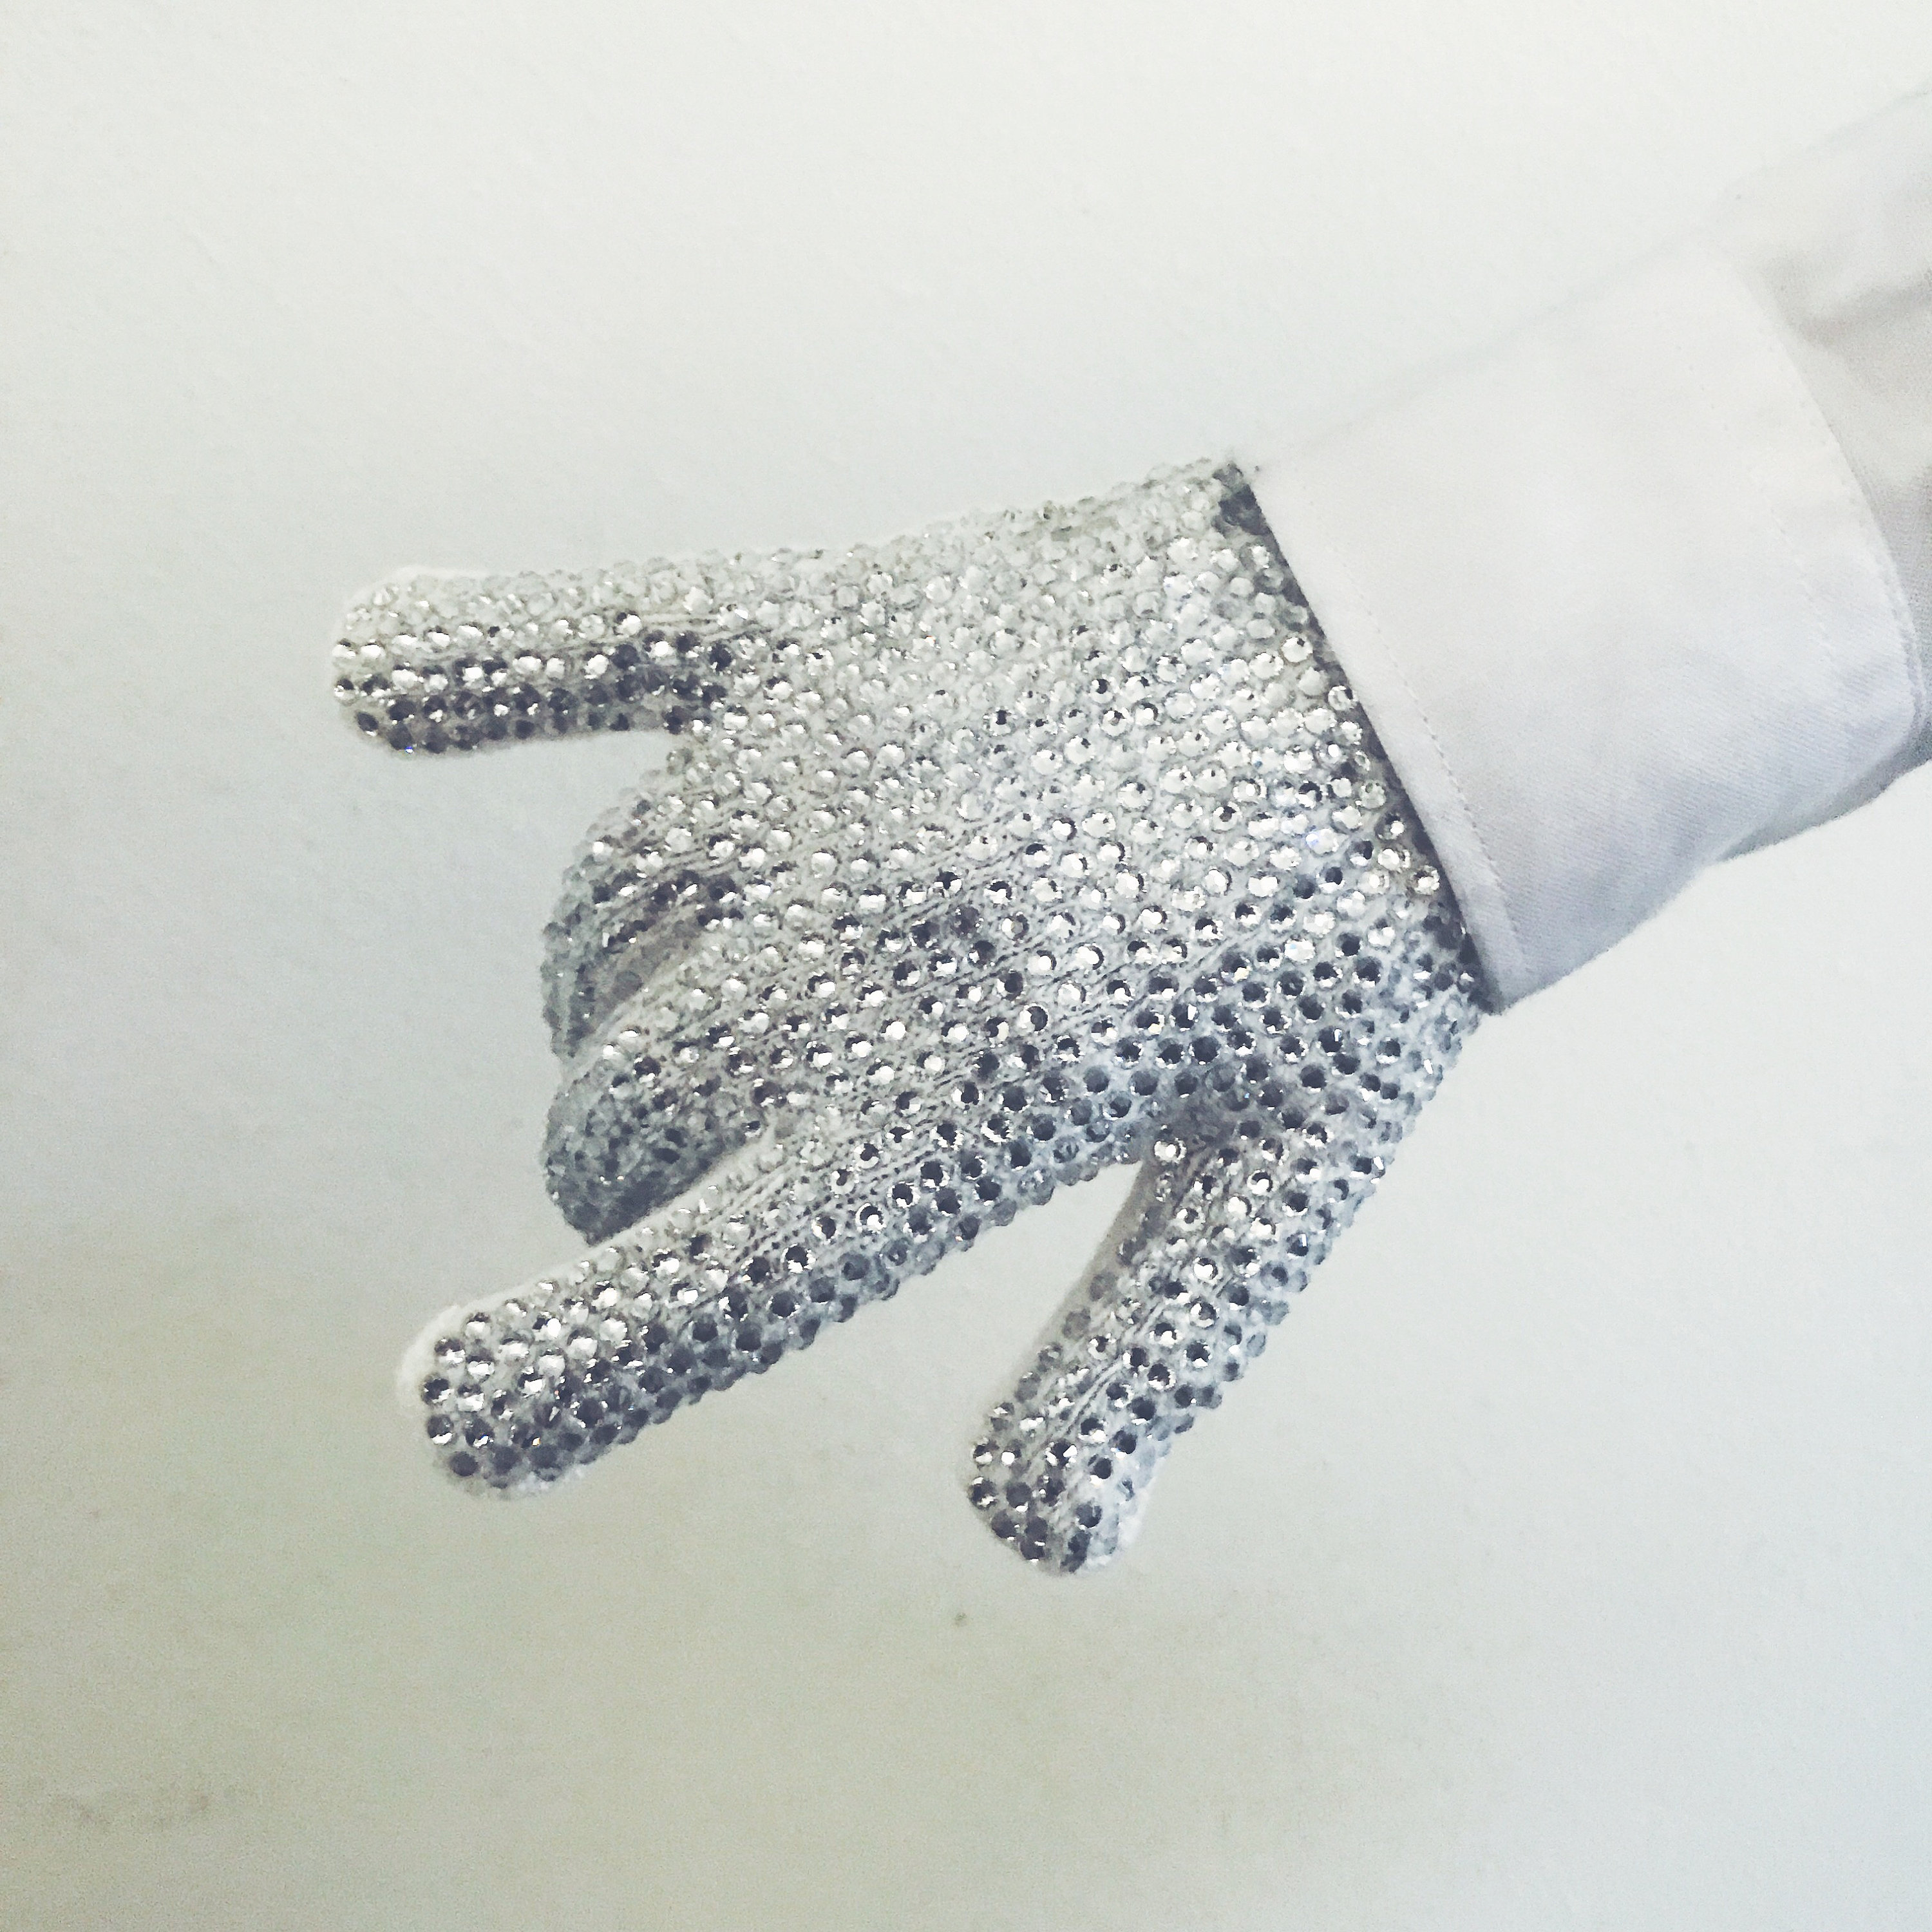 Michael Jackson's famous white diamante glove sells for £254,000